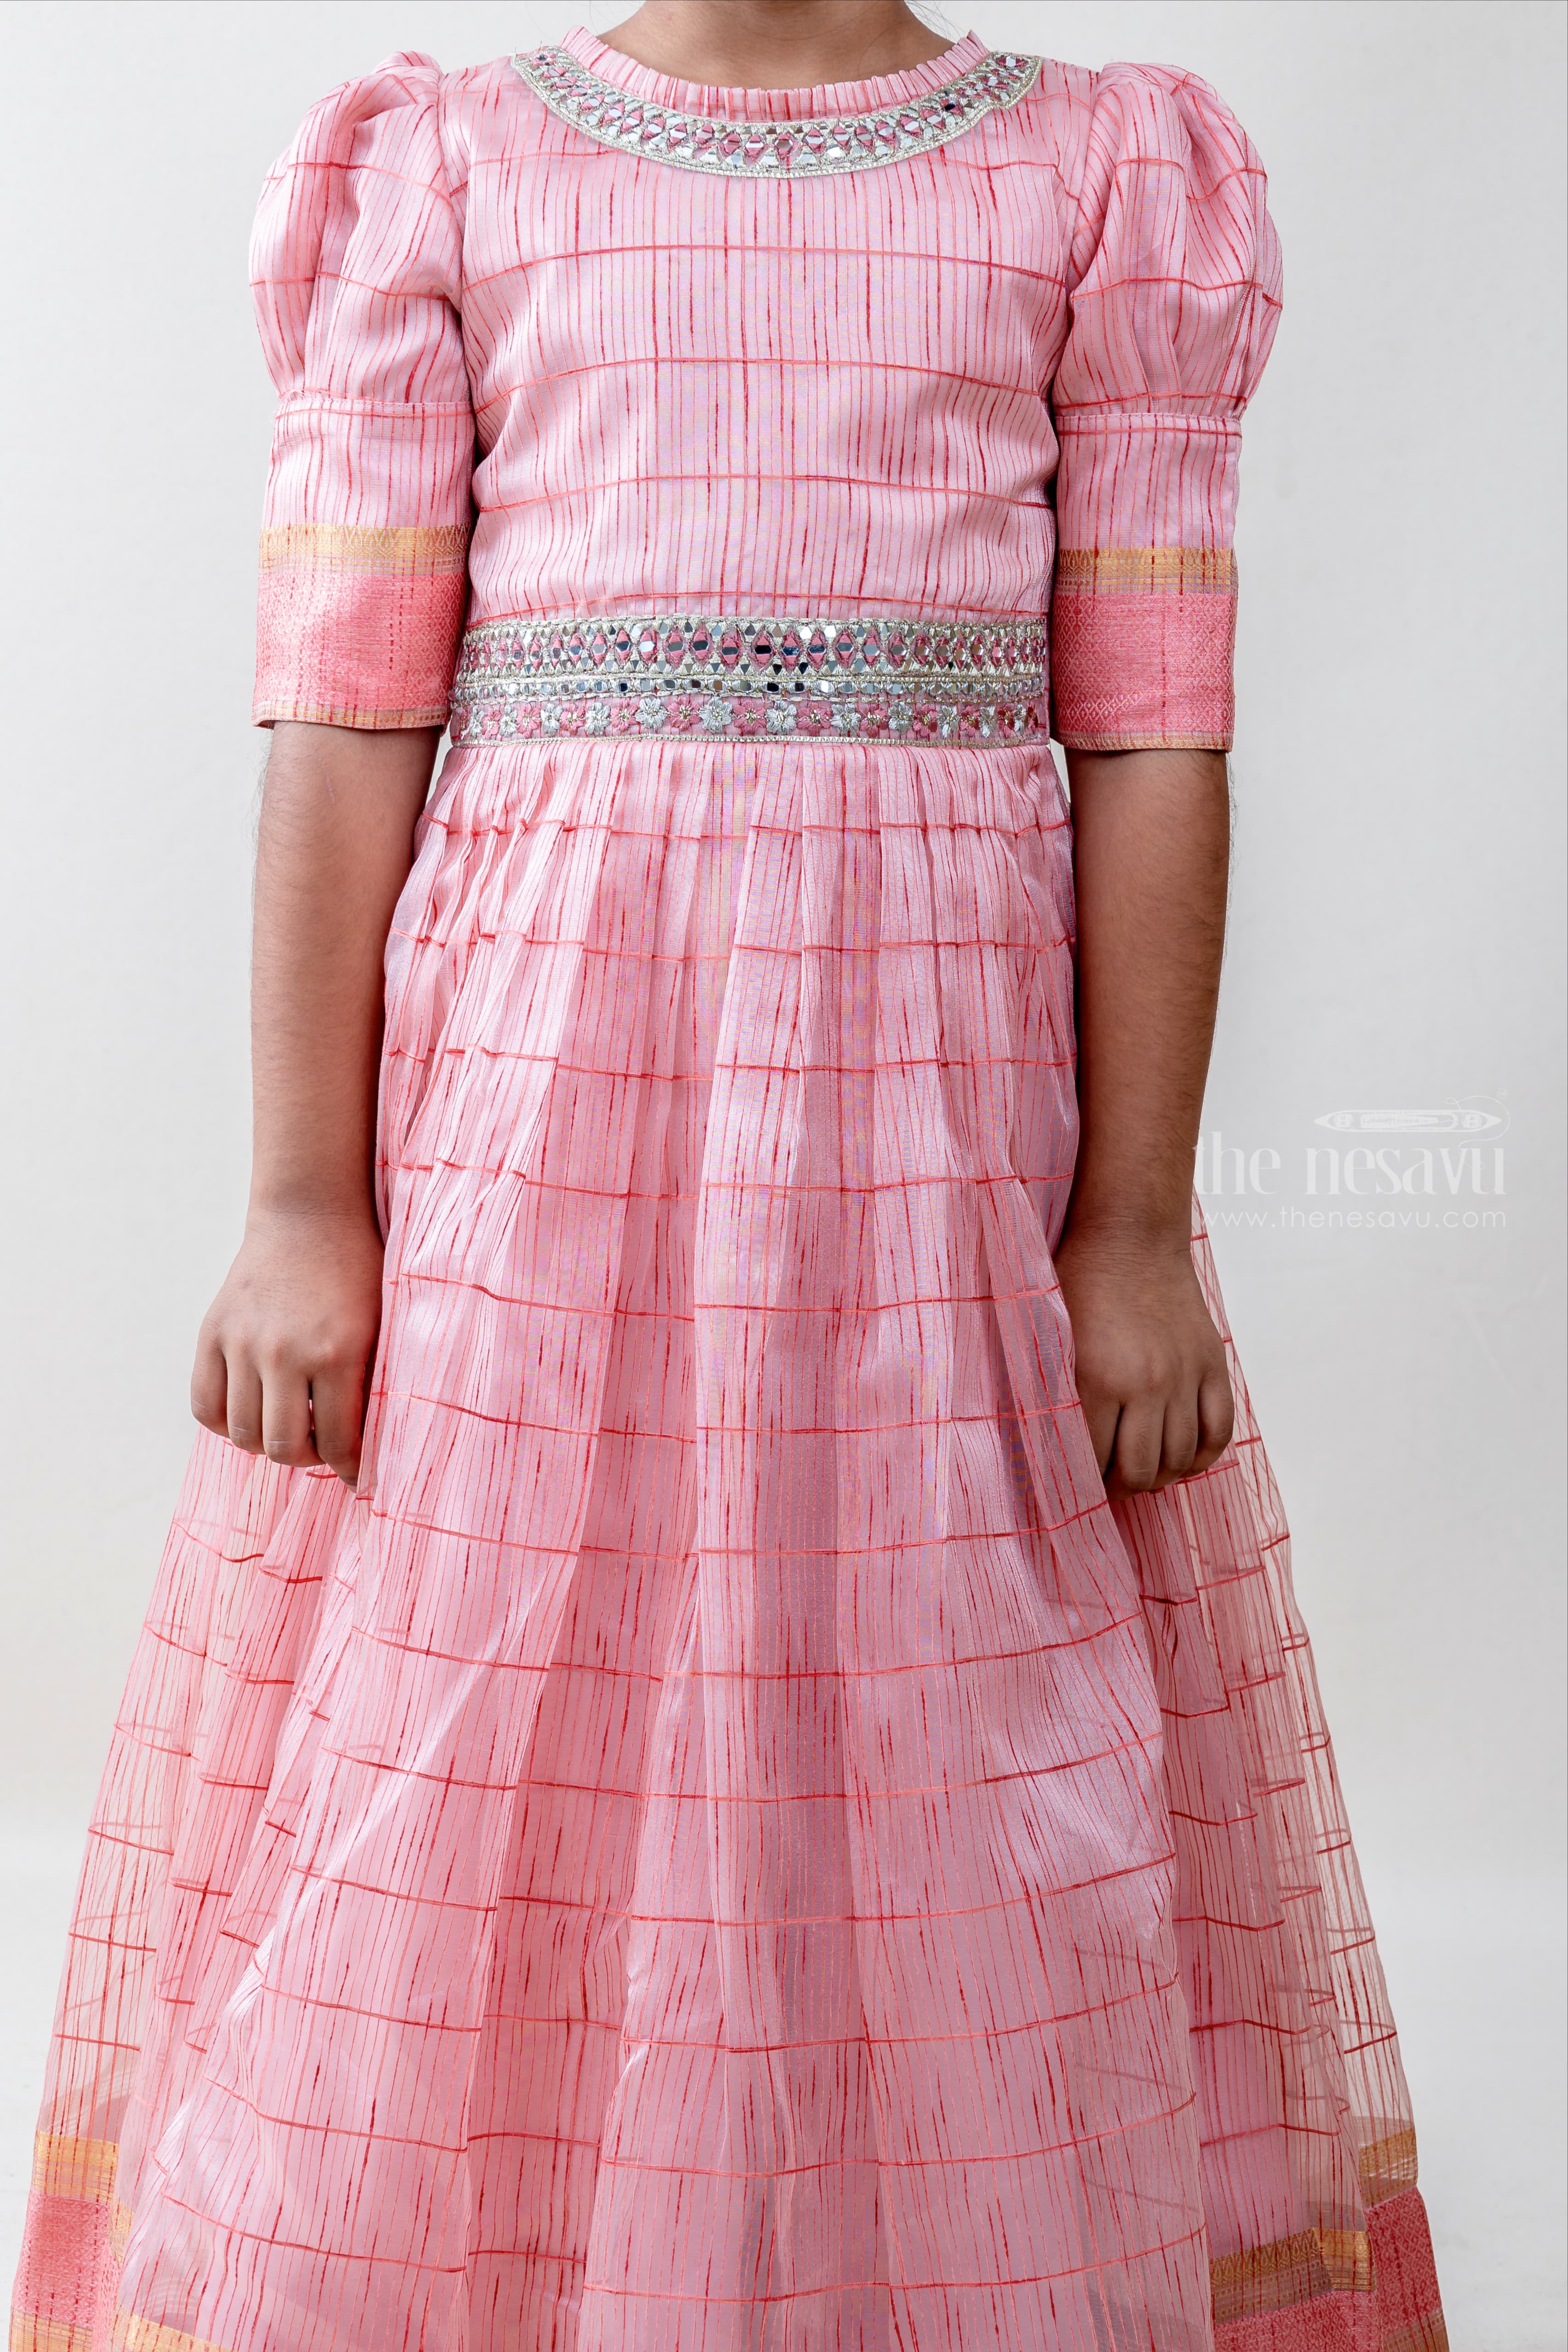 Kids Princess Dresses Children's Occasion Party Dress Birthday Dress –  dressblee